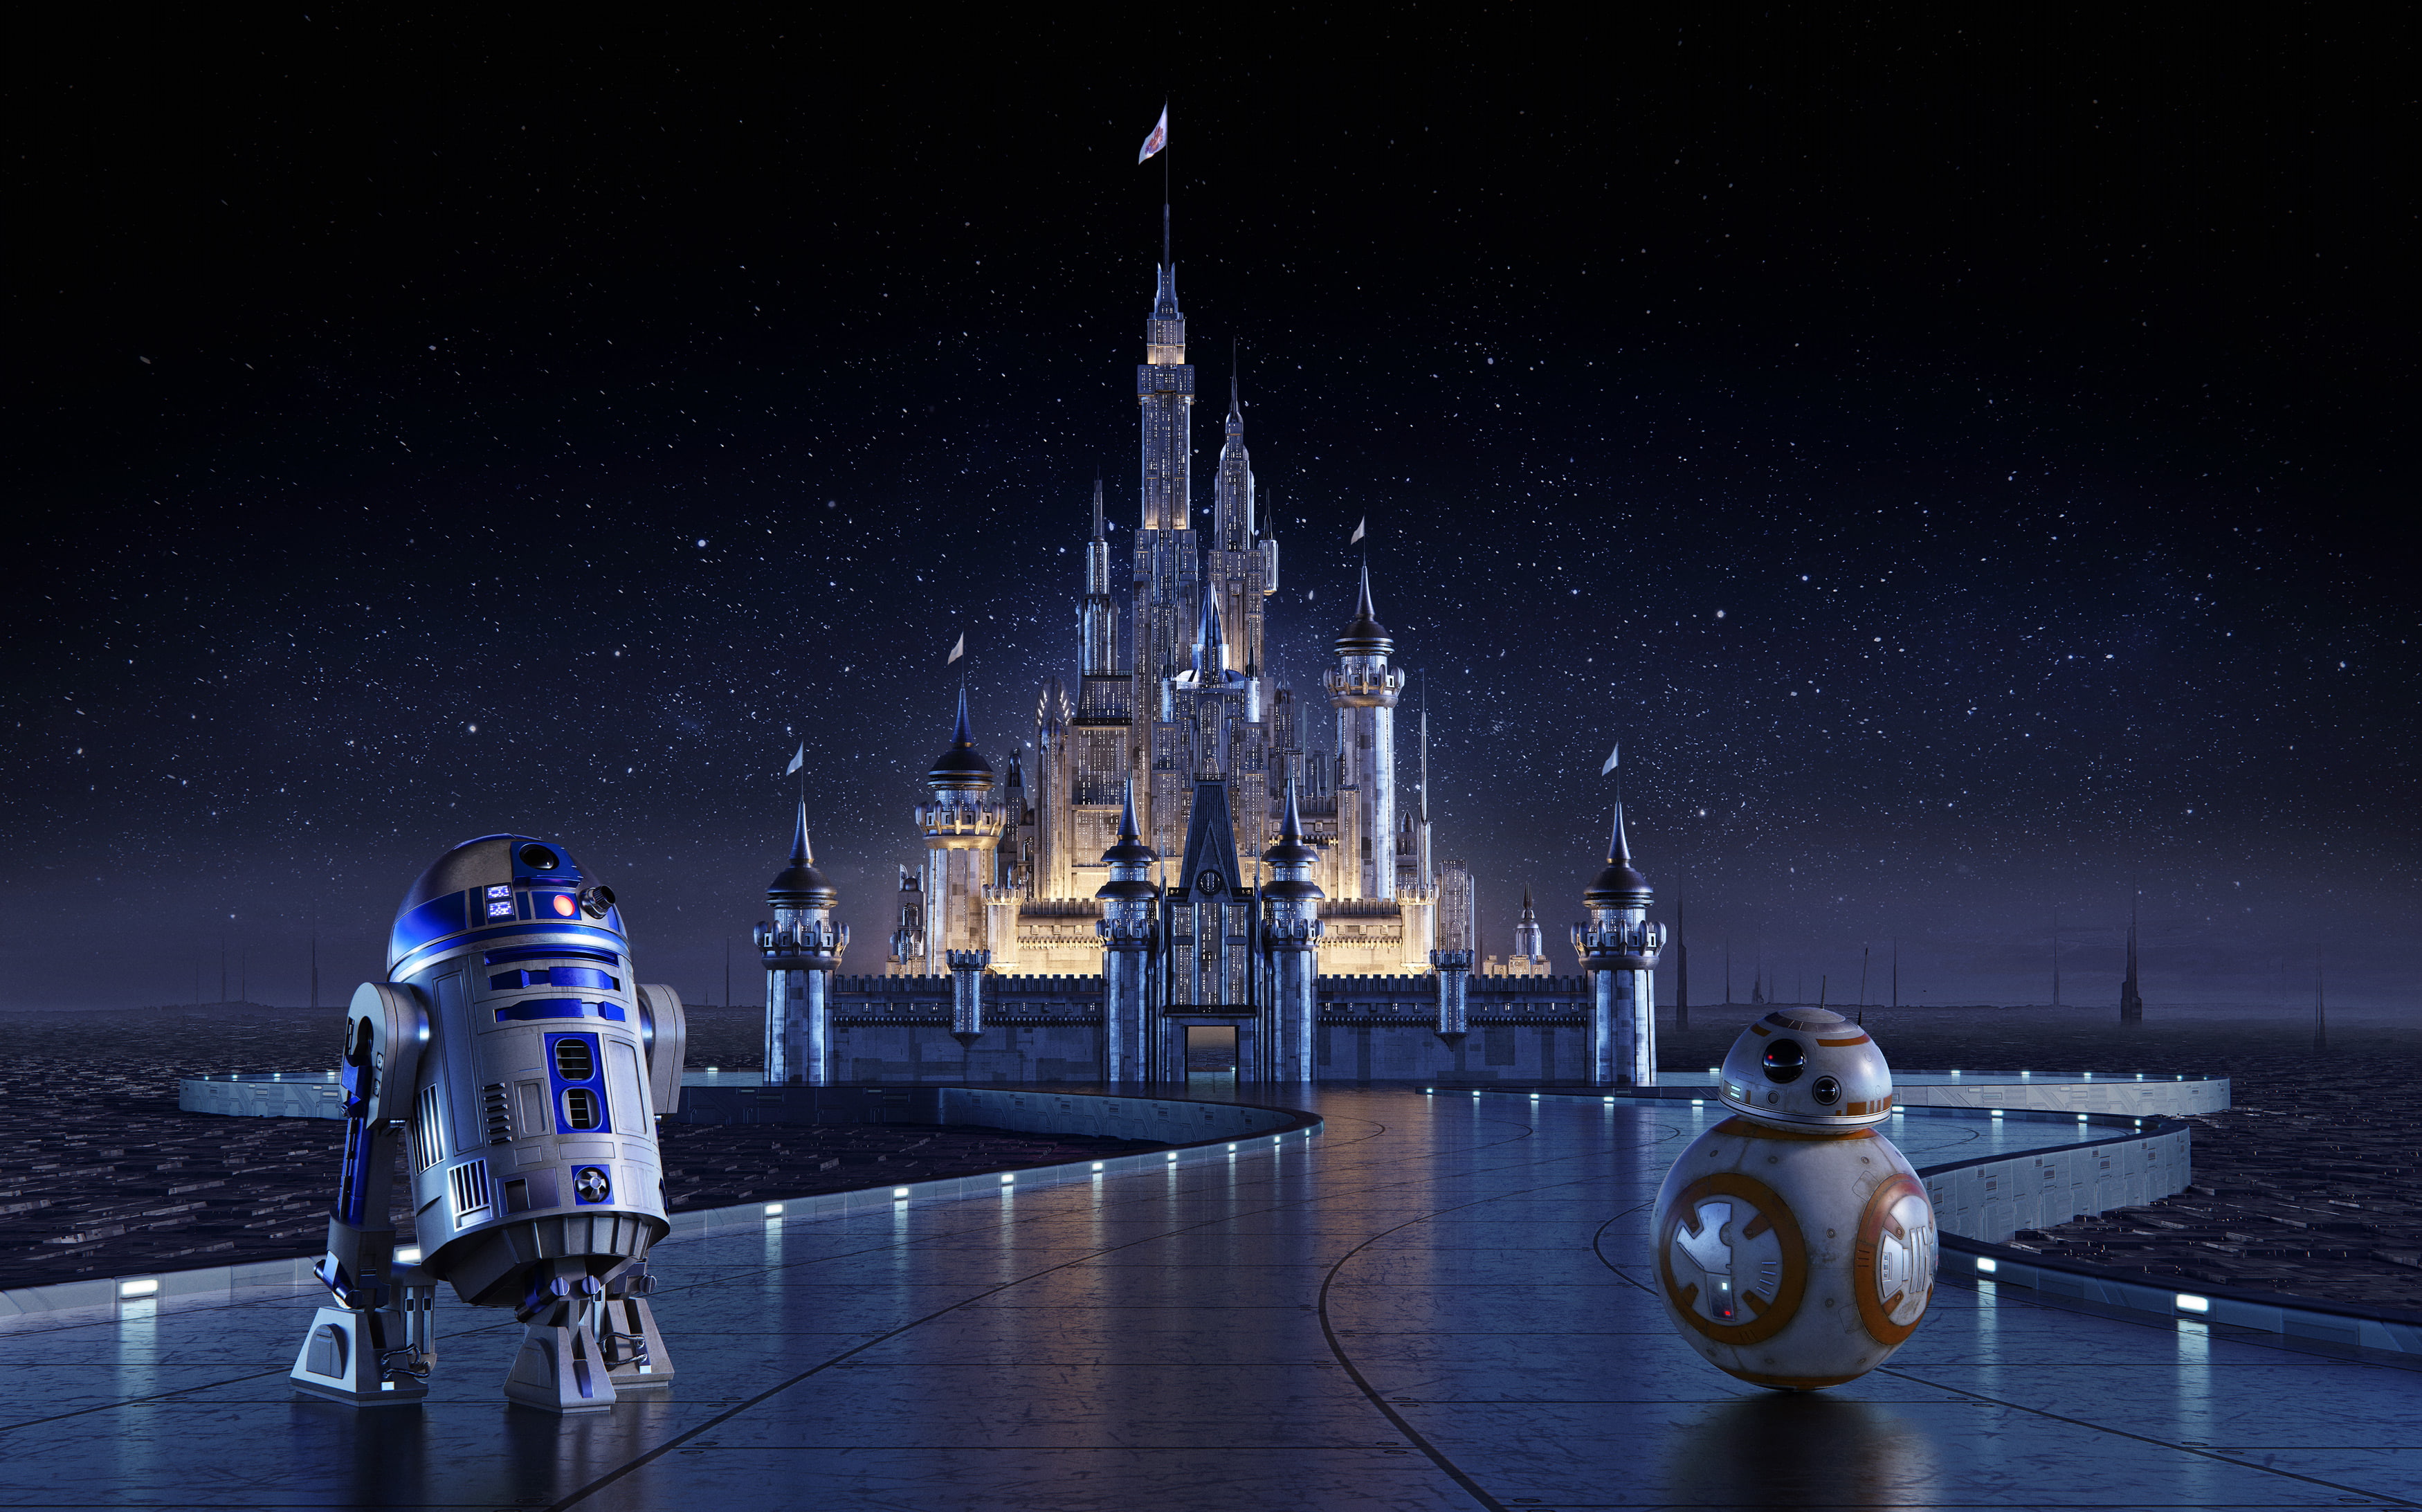 Free Download Hd Wallpaper Disney Castle R2 D2 8 Star Wars Cinderella Castle 4k Wallpaper Flare